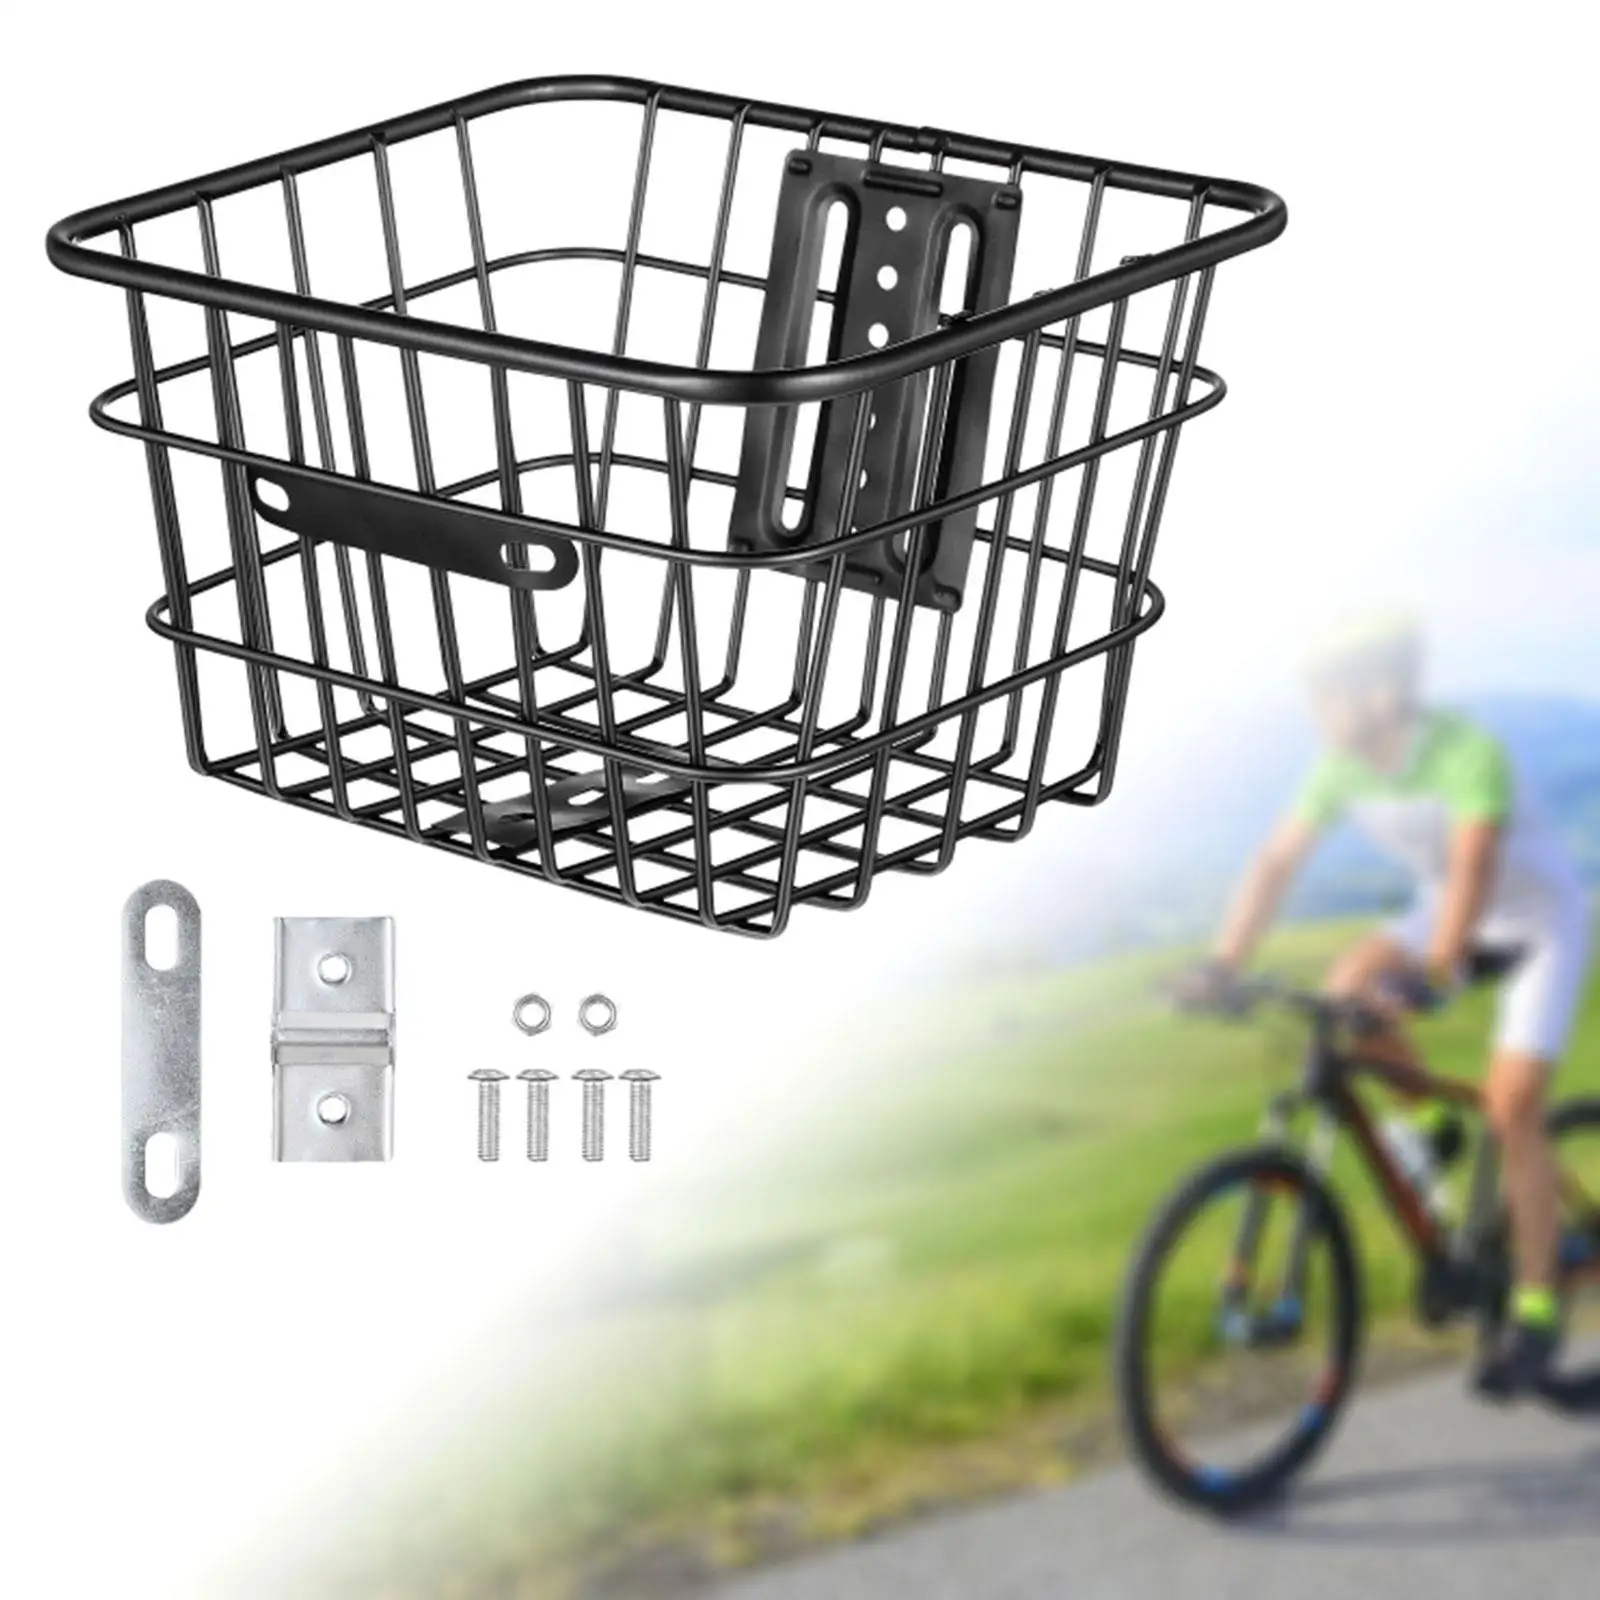 Bike Metal Mesh Front or Rear Basket without Lid Strengthened Frame for Pet